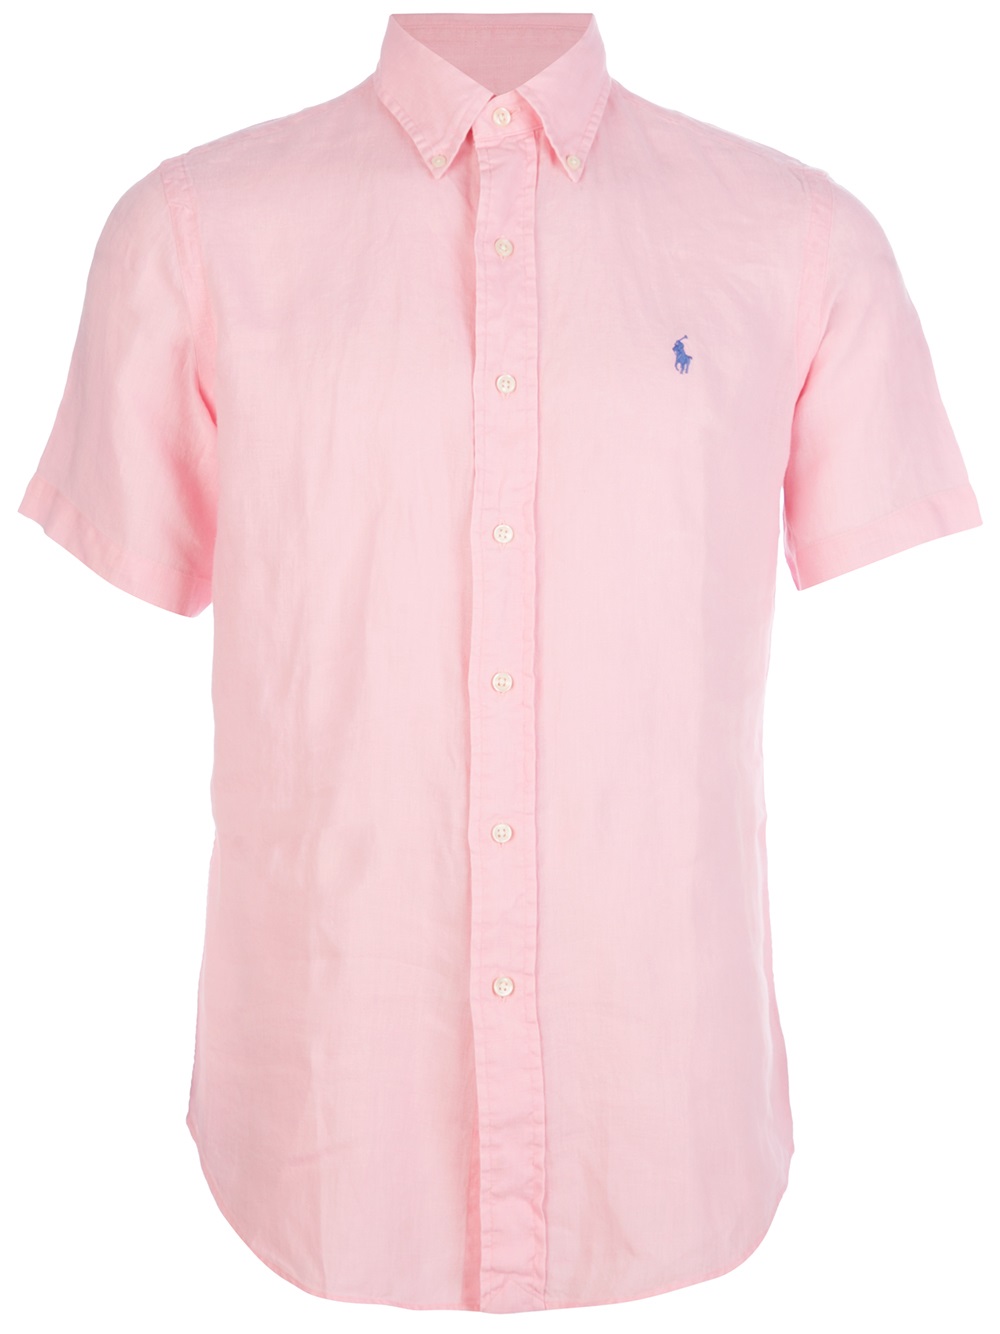 Polo Ralph Lauren Short Sleeve Shirt in Pink for Men - Lyst